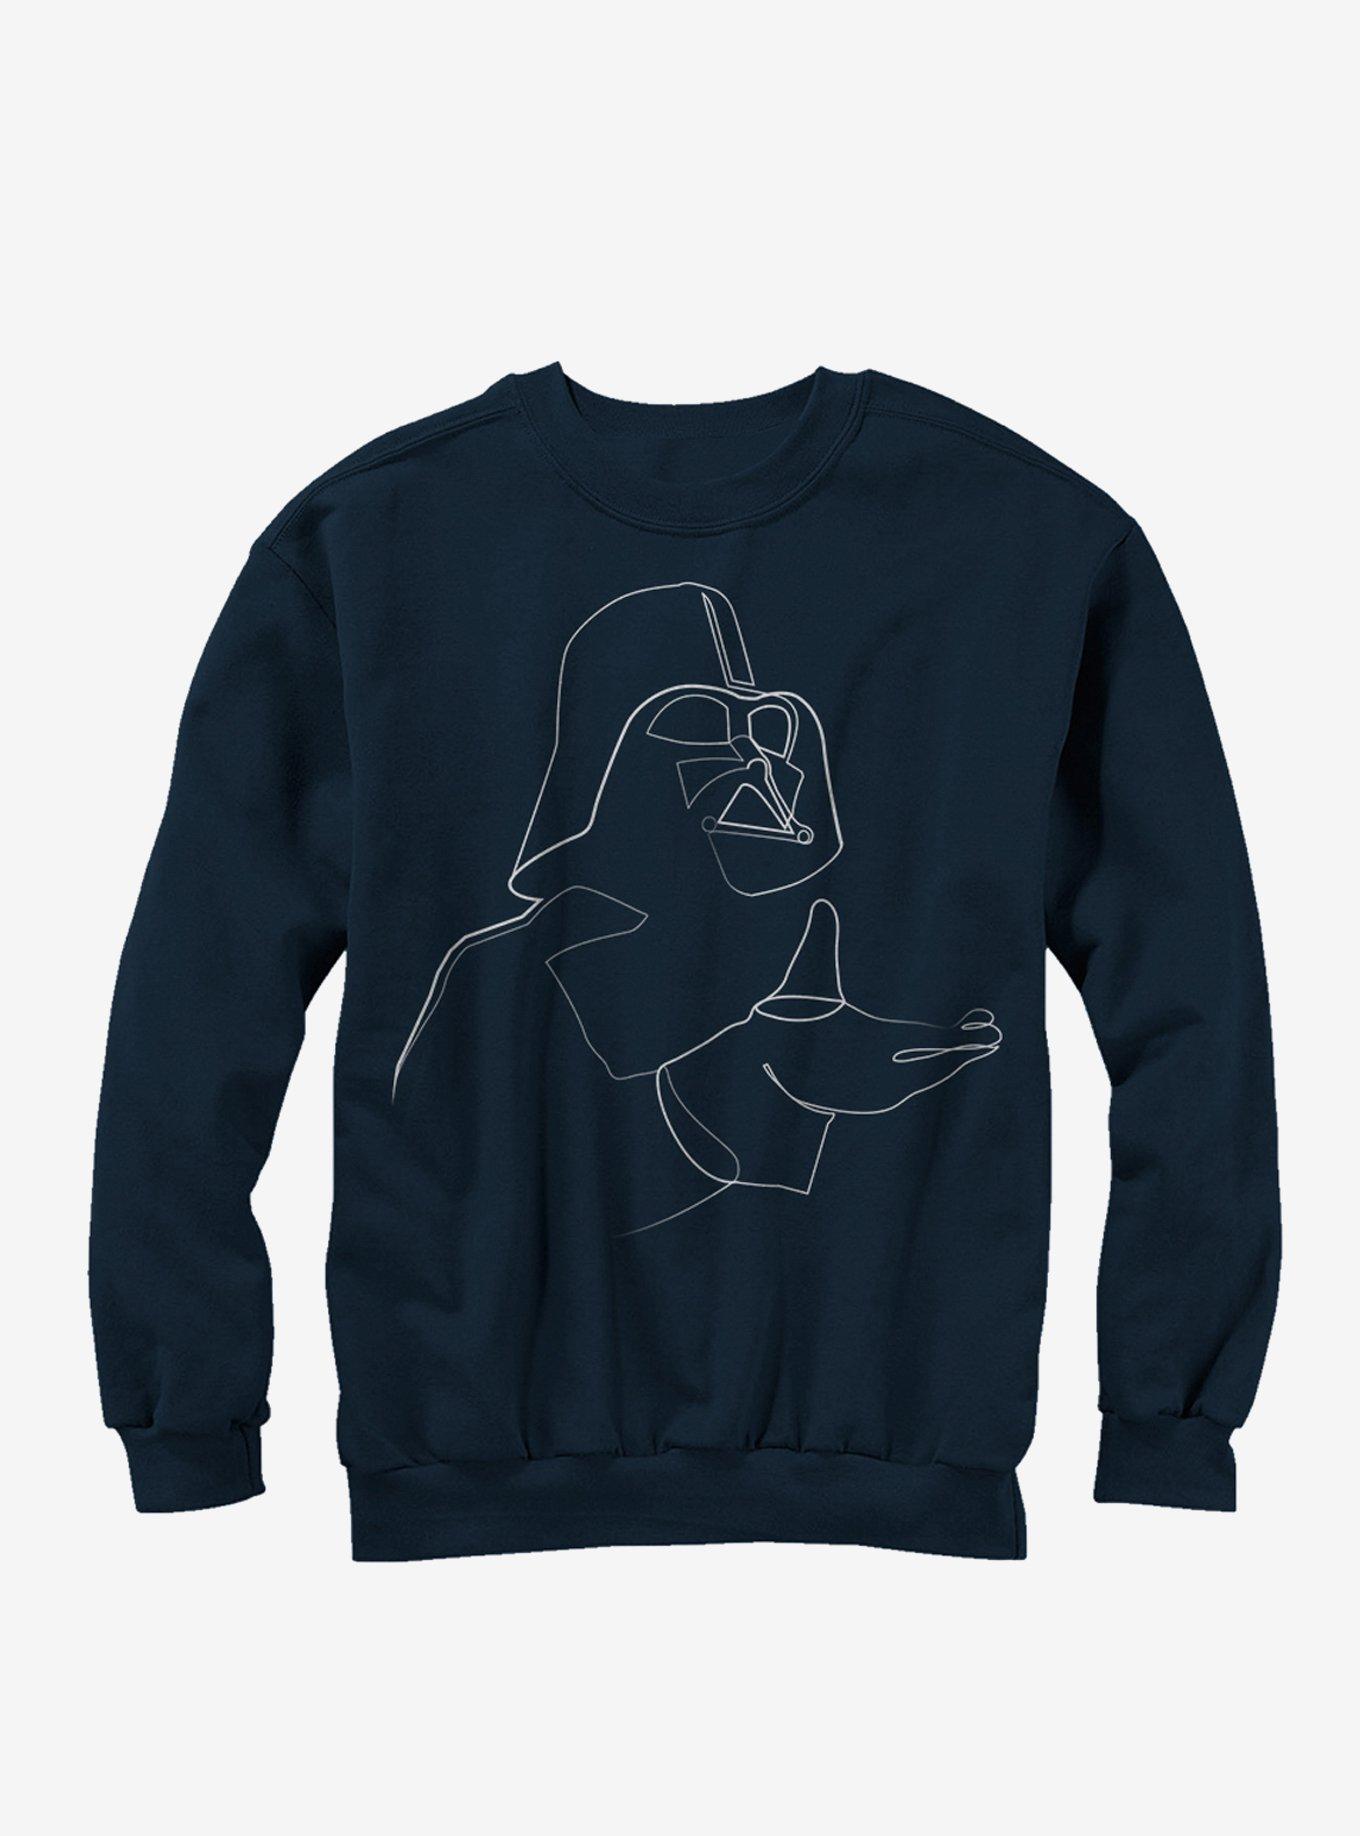 Star Wars Darth Vader Outline Sweatshirt, NAVY, hi-res